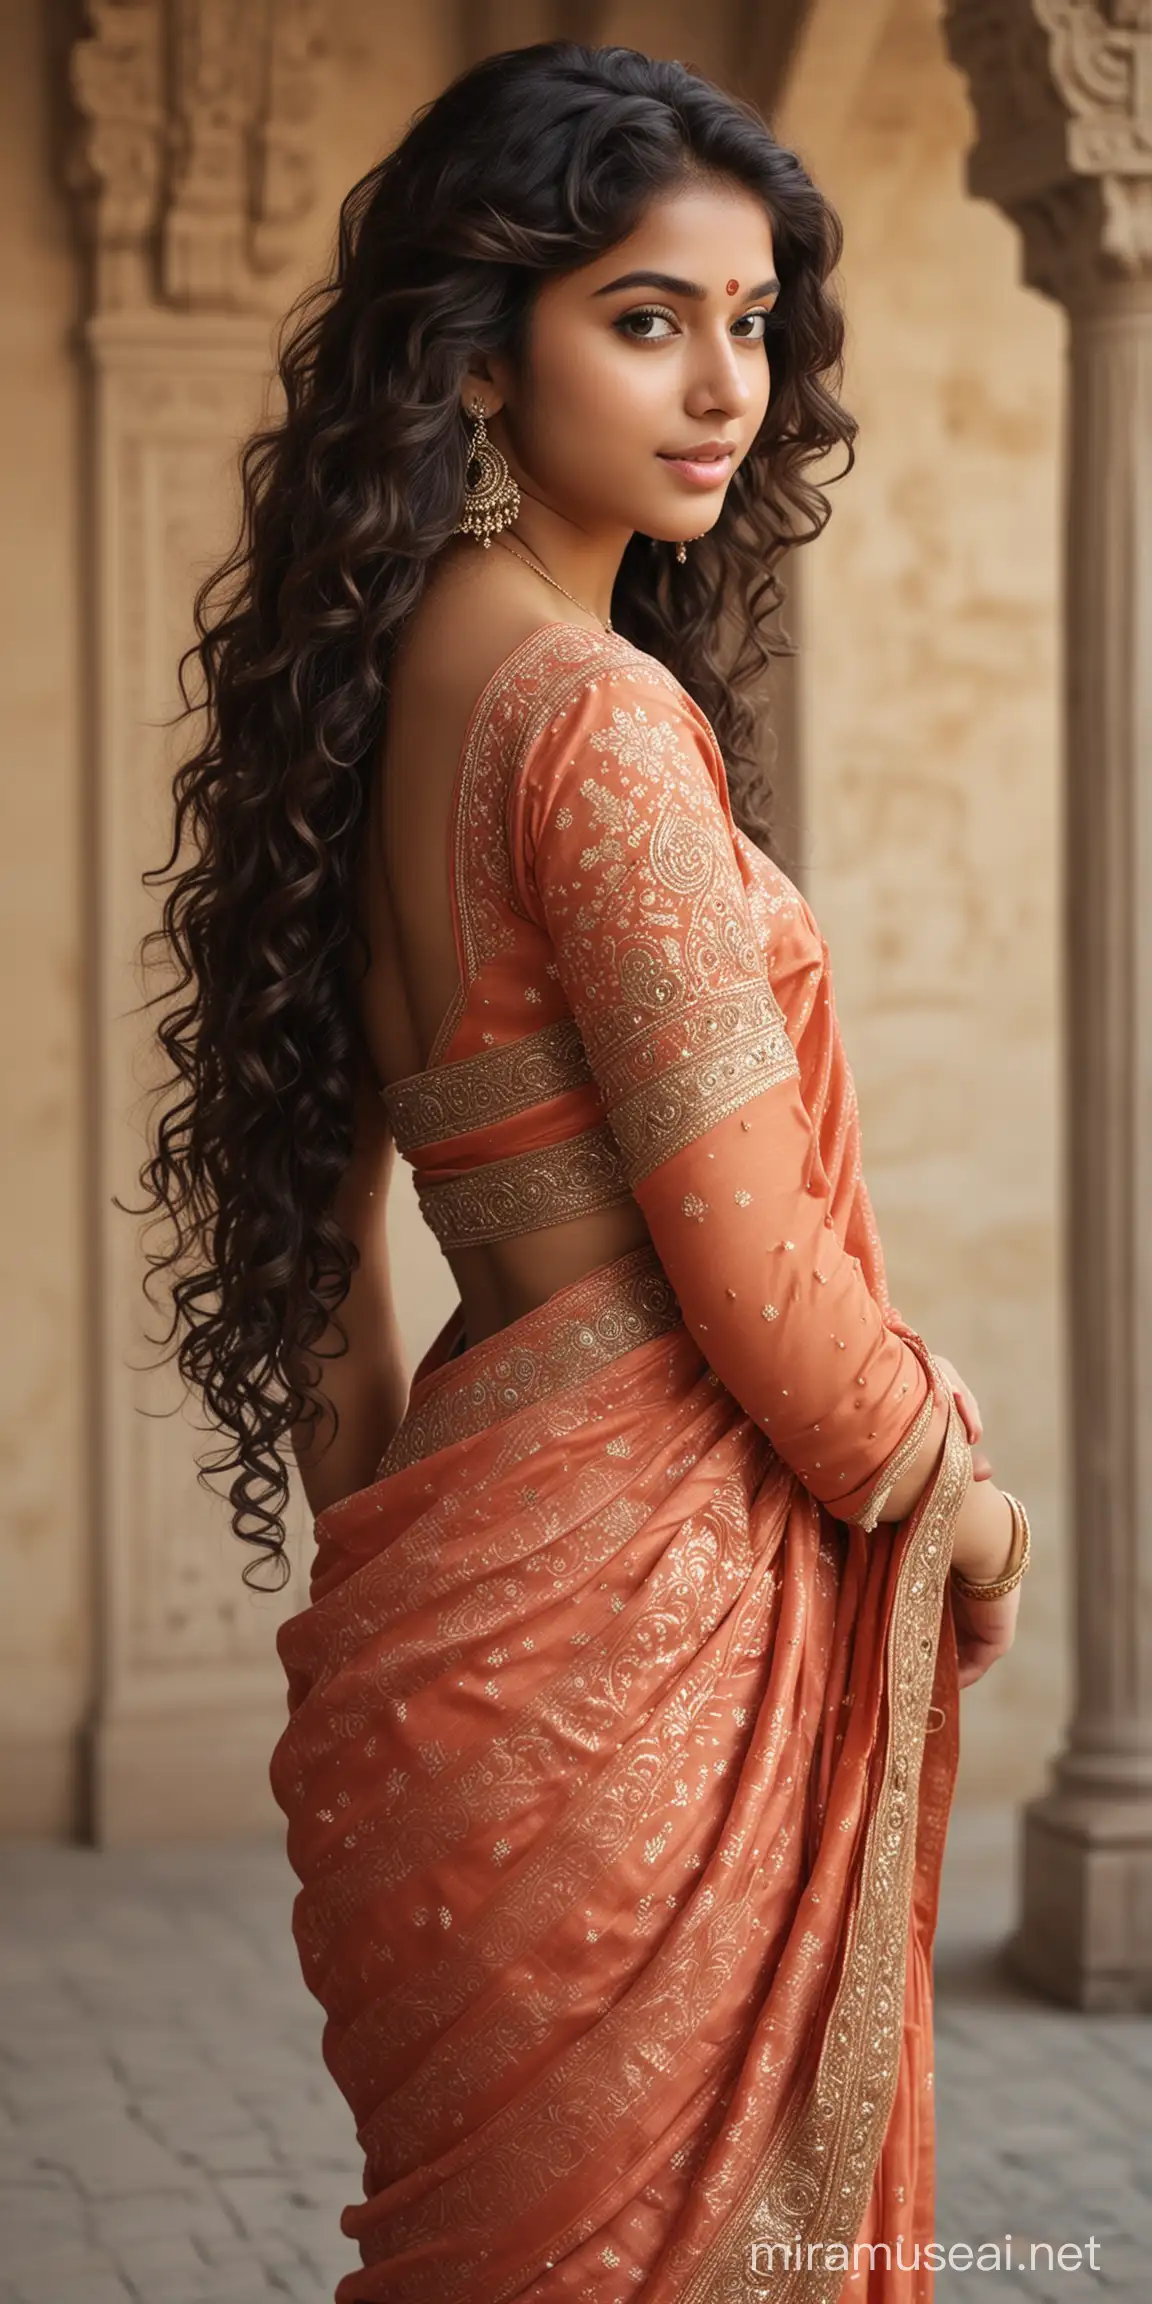 Elegant Indian Girl in Stunning Saree Portrait